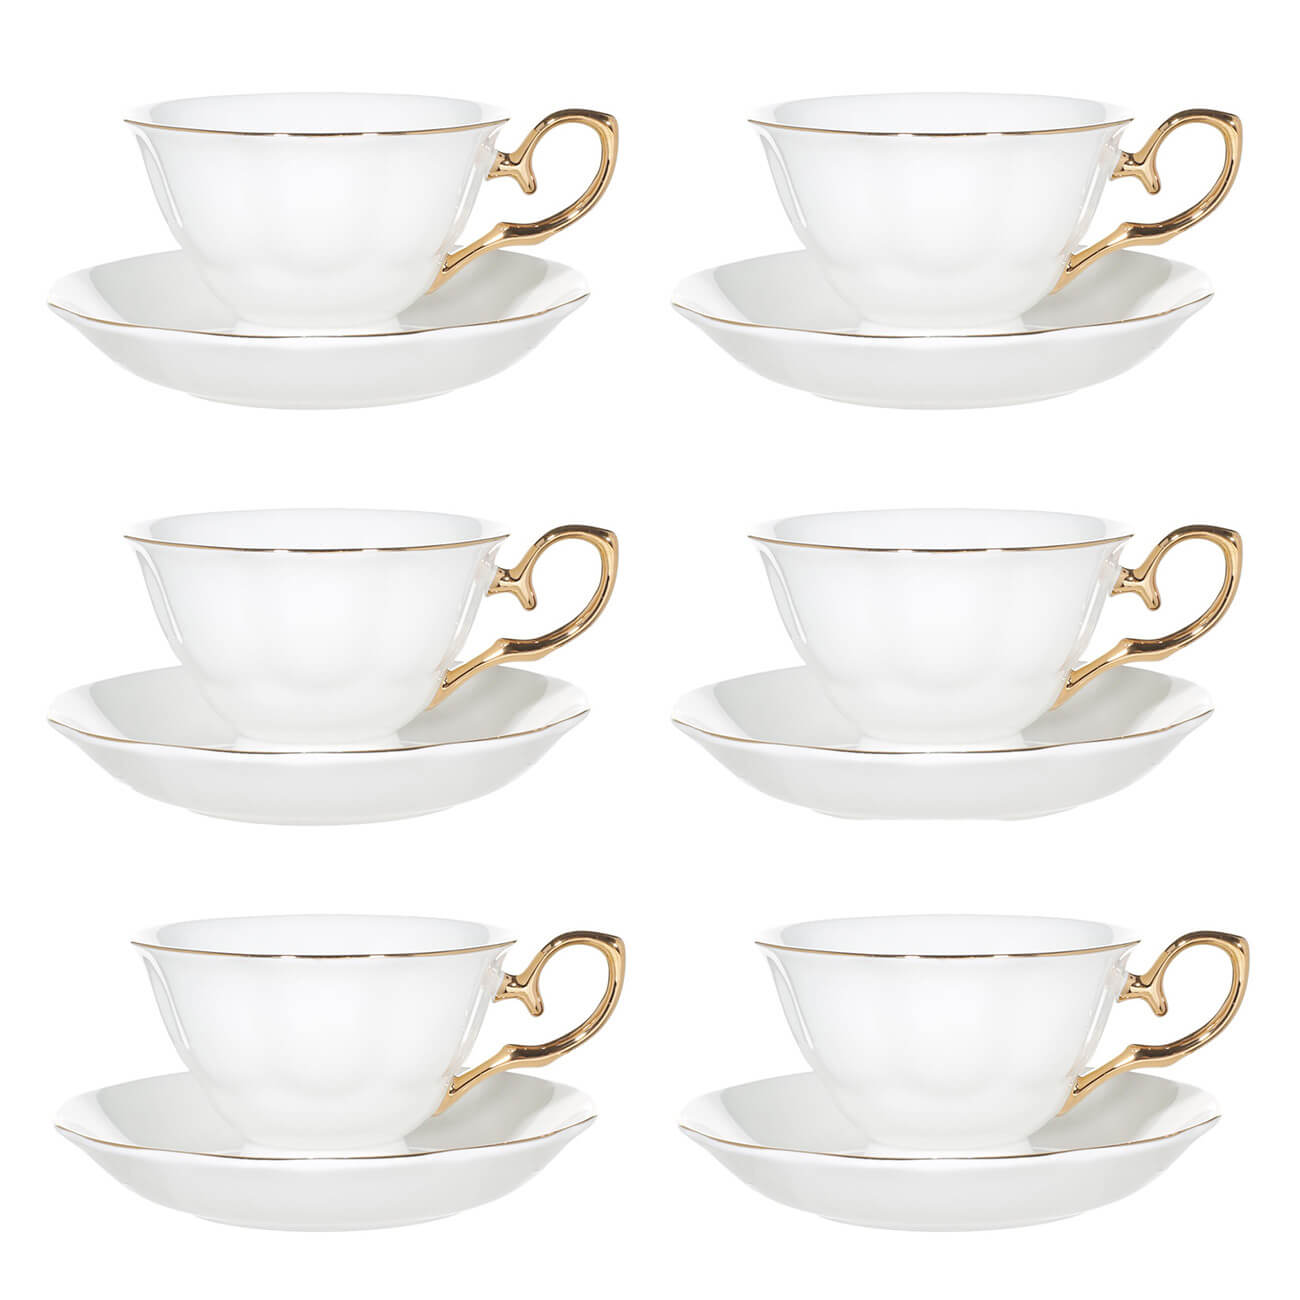 Пара чайная, 6 перс, 12 пр, 180 мл, фарфор F, бело-золотистая, Premium Gold чайная пара gold кружка 200 мл блюдце 13 см